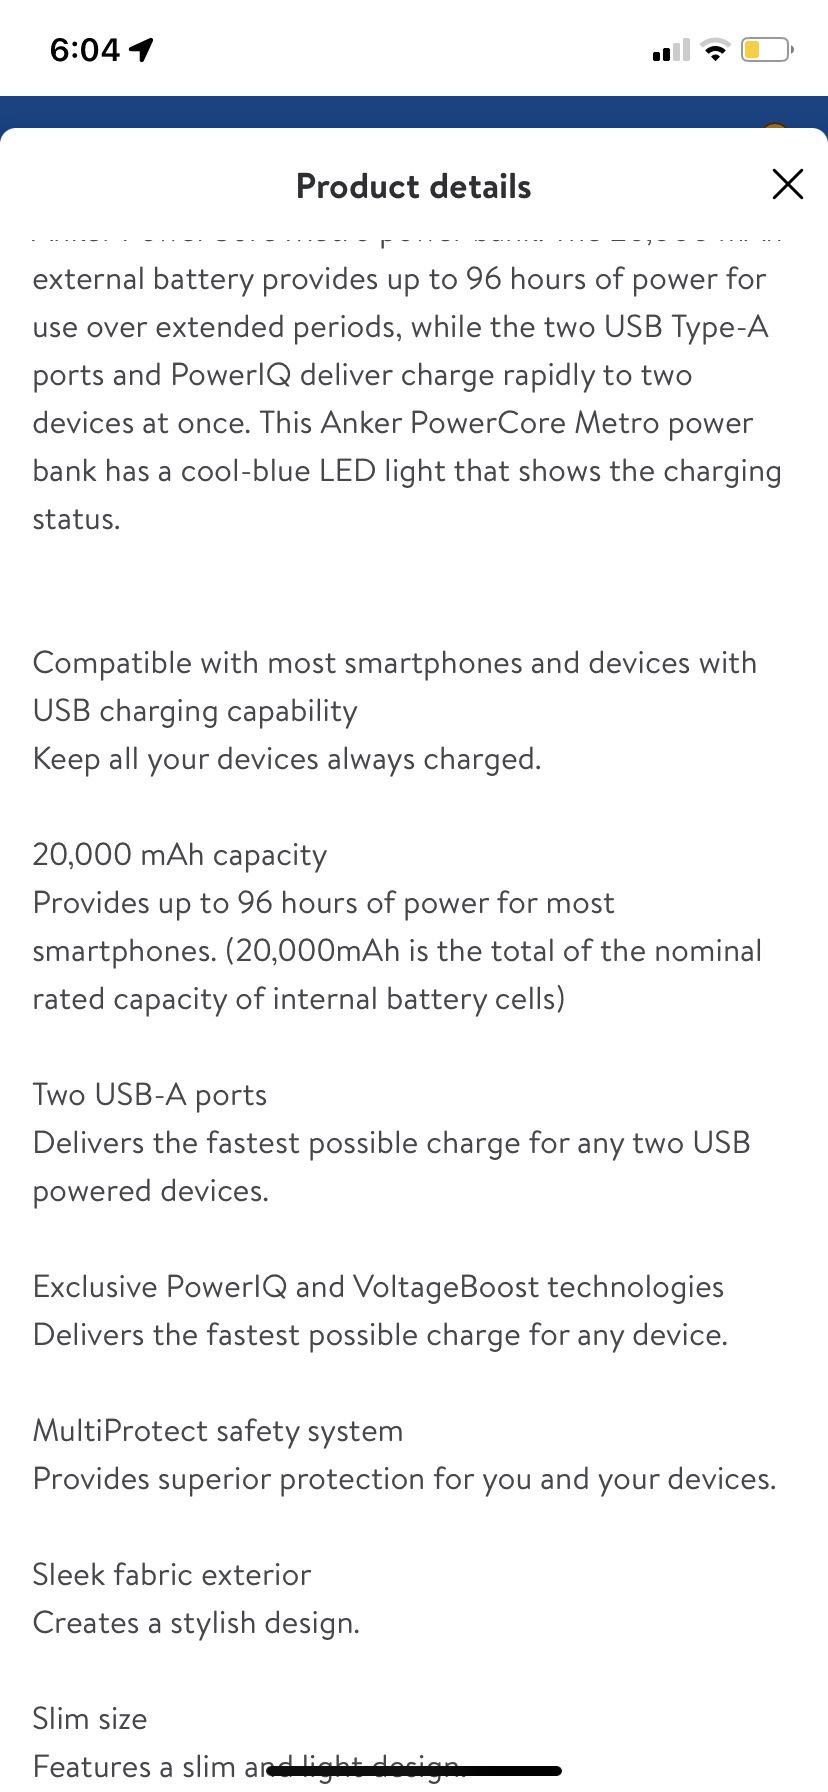 Anker Powercore Metro 20000mAh Portable Charger 2-Ports USB Power Bank Slim External Battery Pack